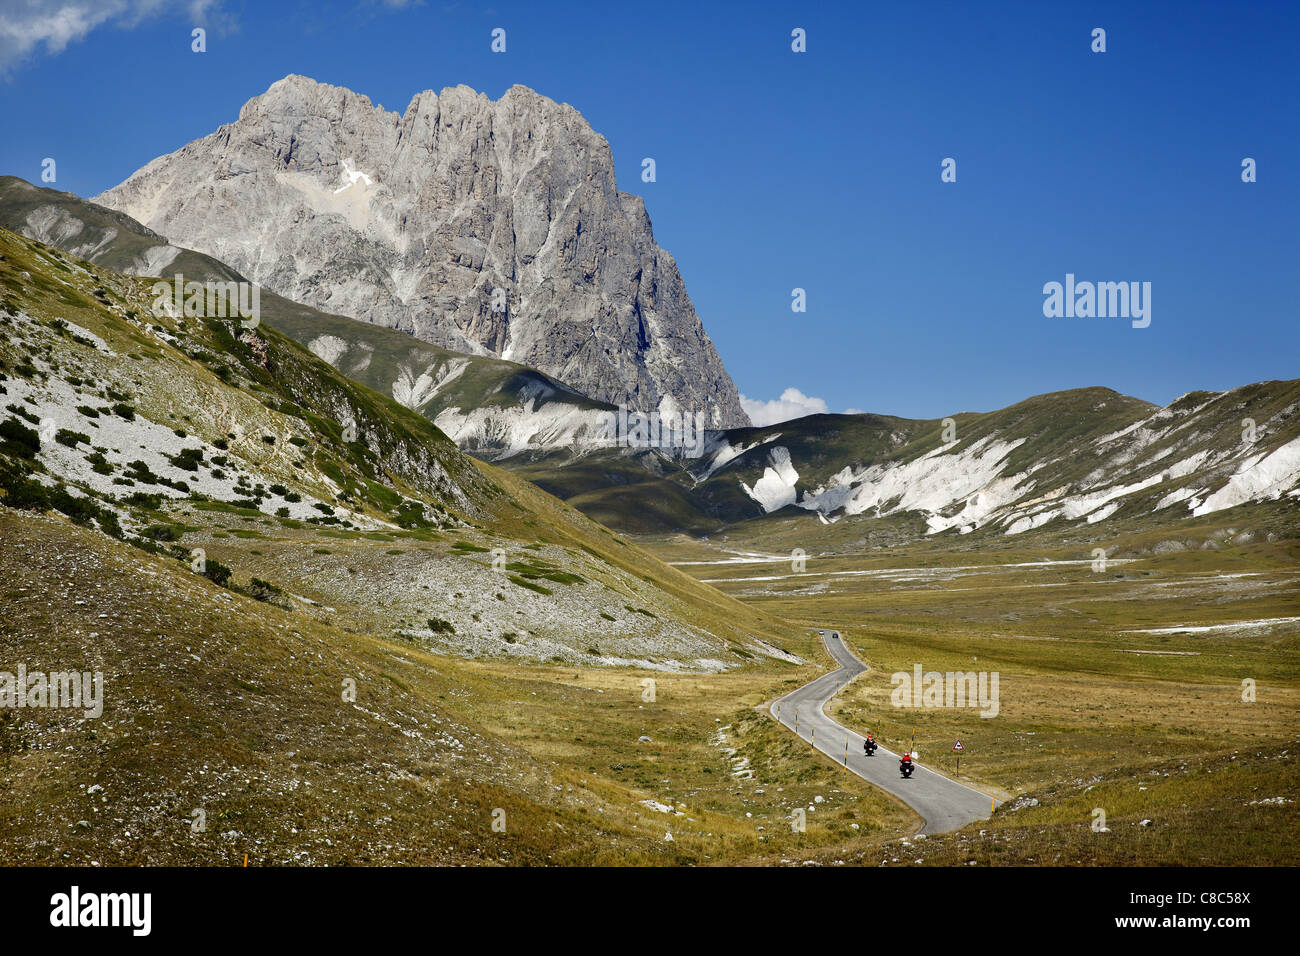 Campo Imperatore in the Gran Sasso, Abruzzo, Italy. In the background is Corno Grande, tallest mountain in the apennines. Stock Photo